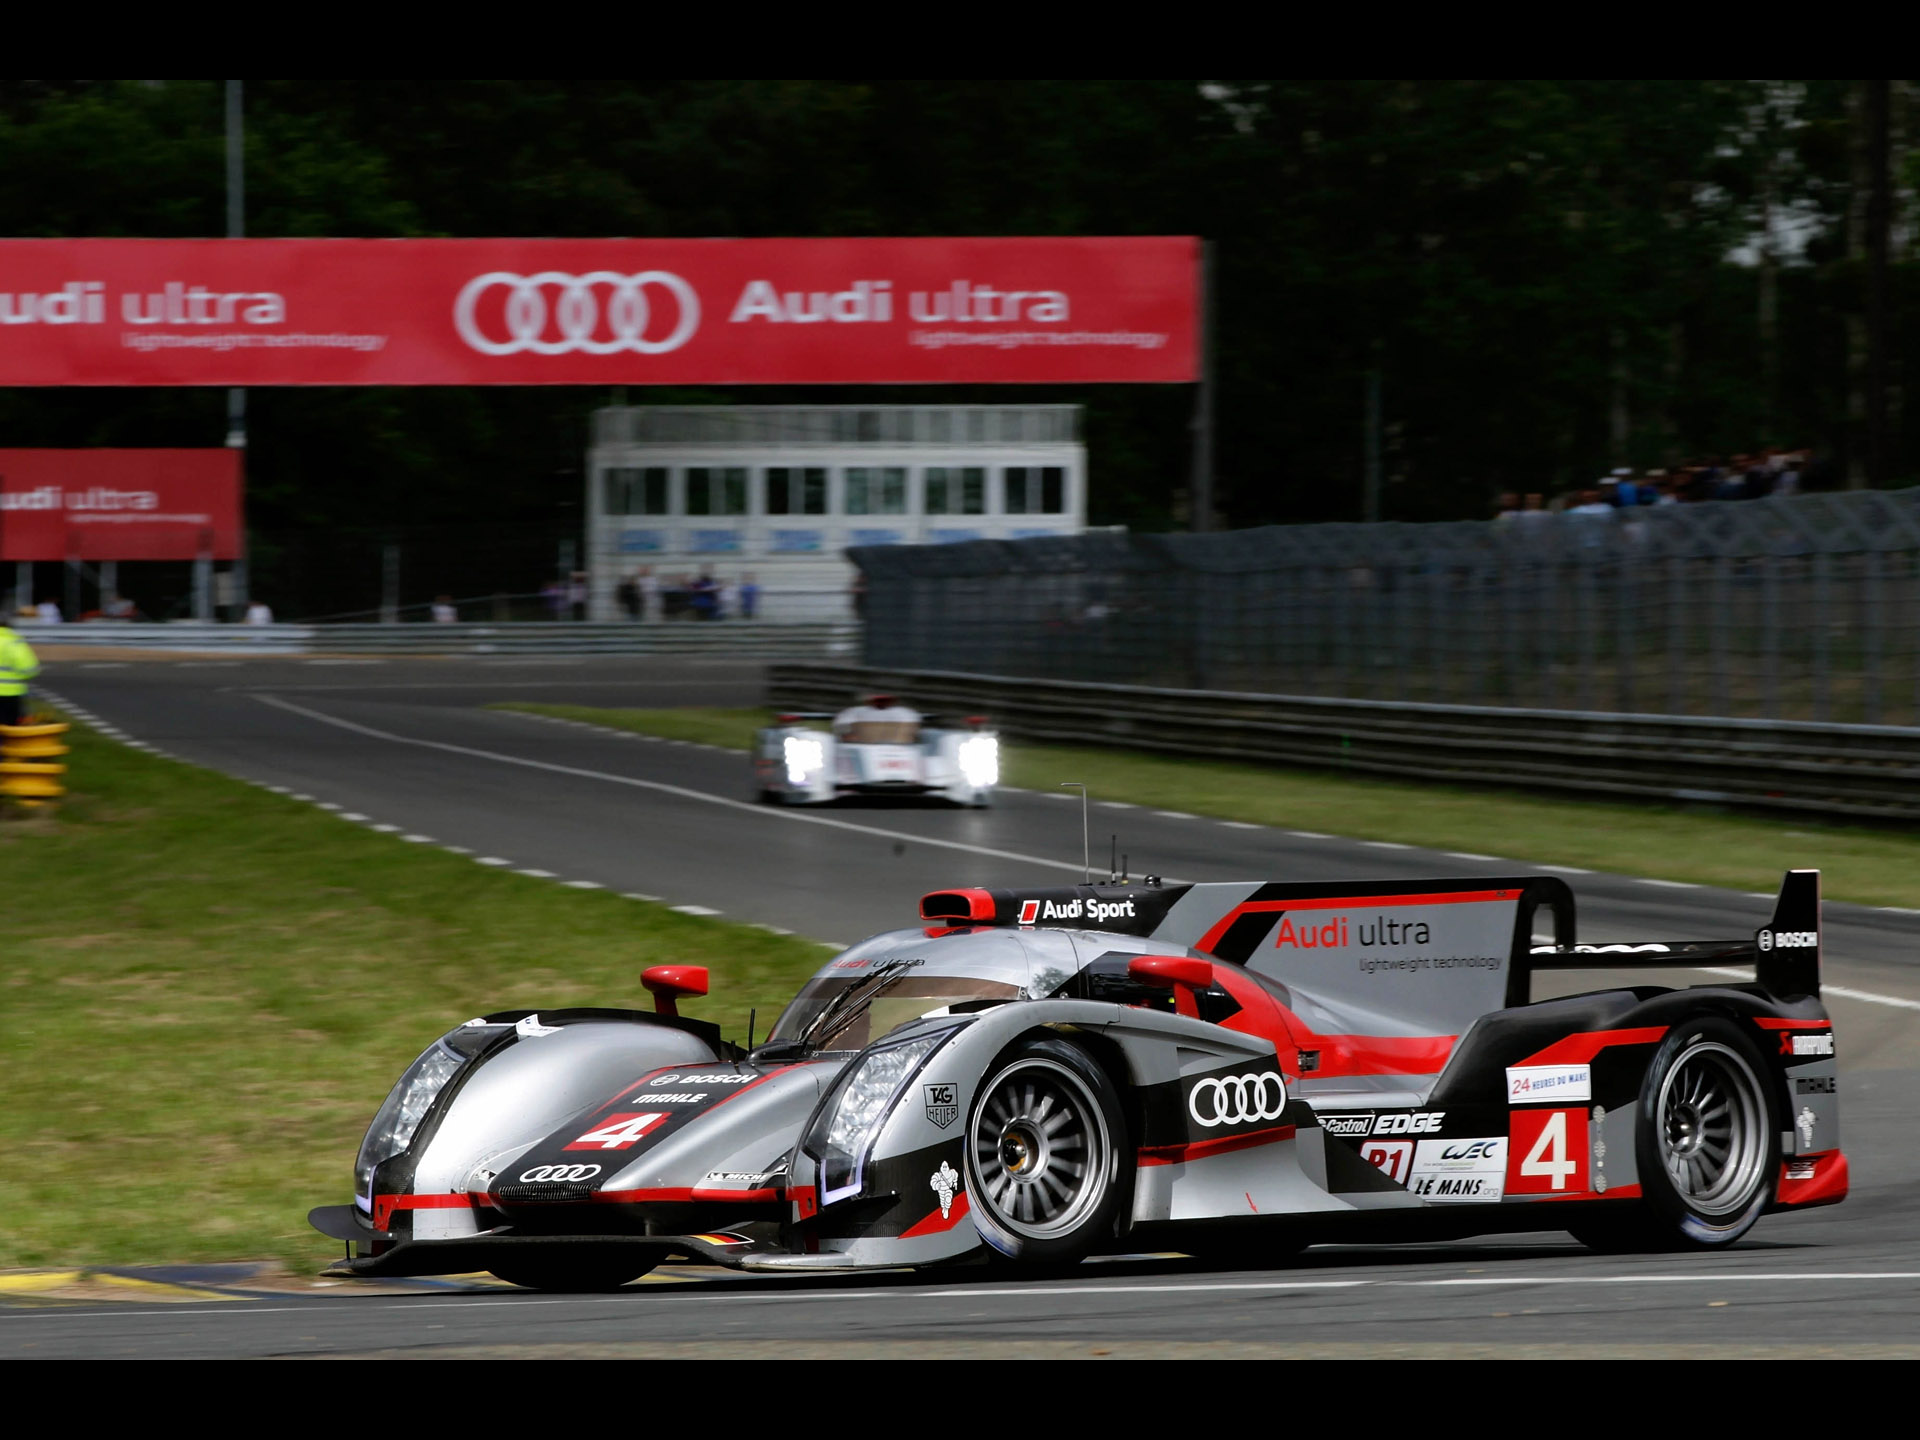 Audi R18 @ Le Mans test day [2012] - アウディに嵌まる - 壁紙画像ブログ